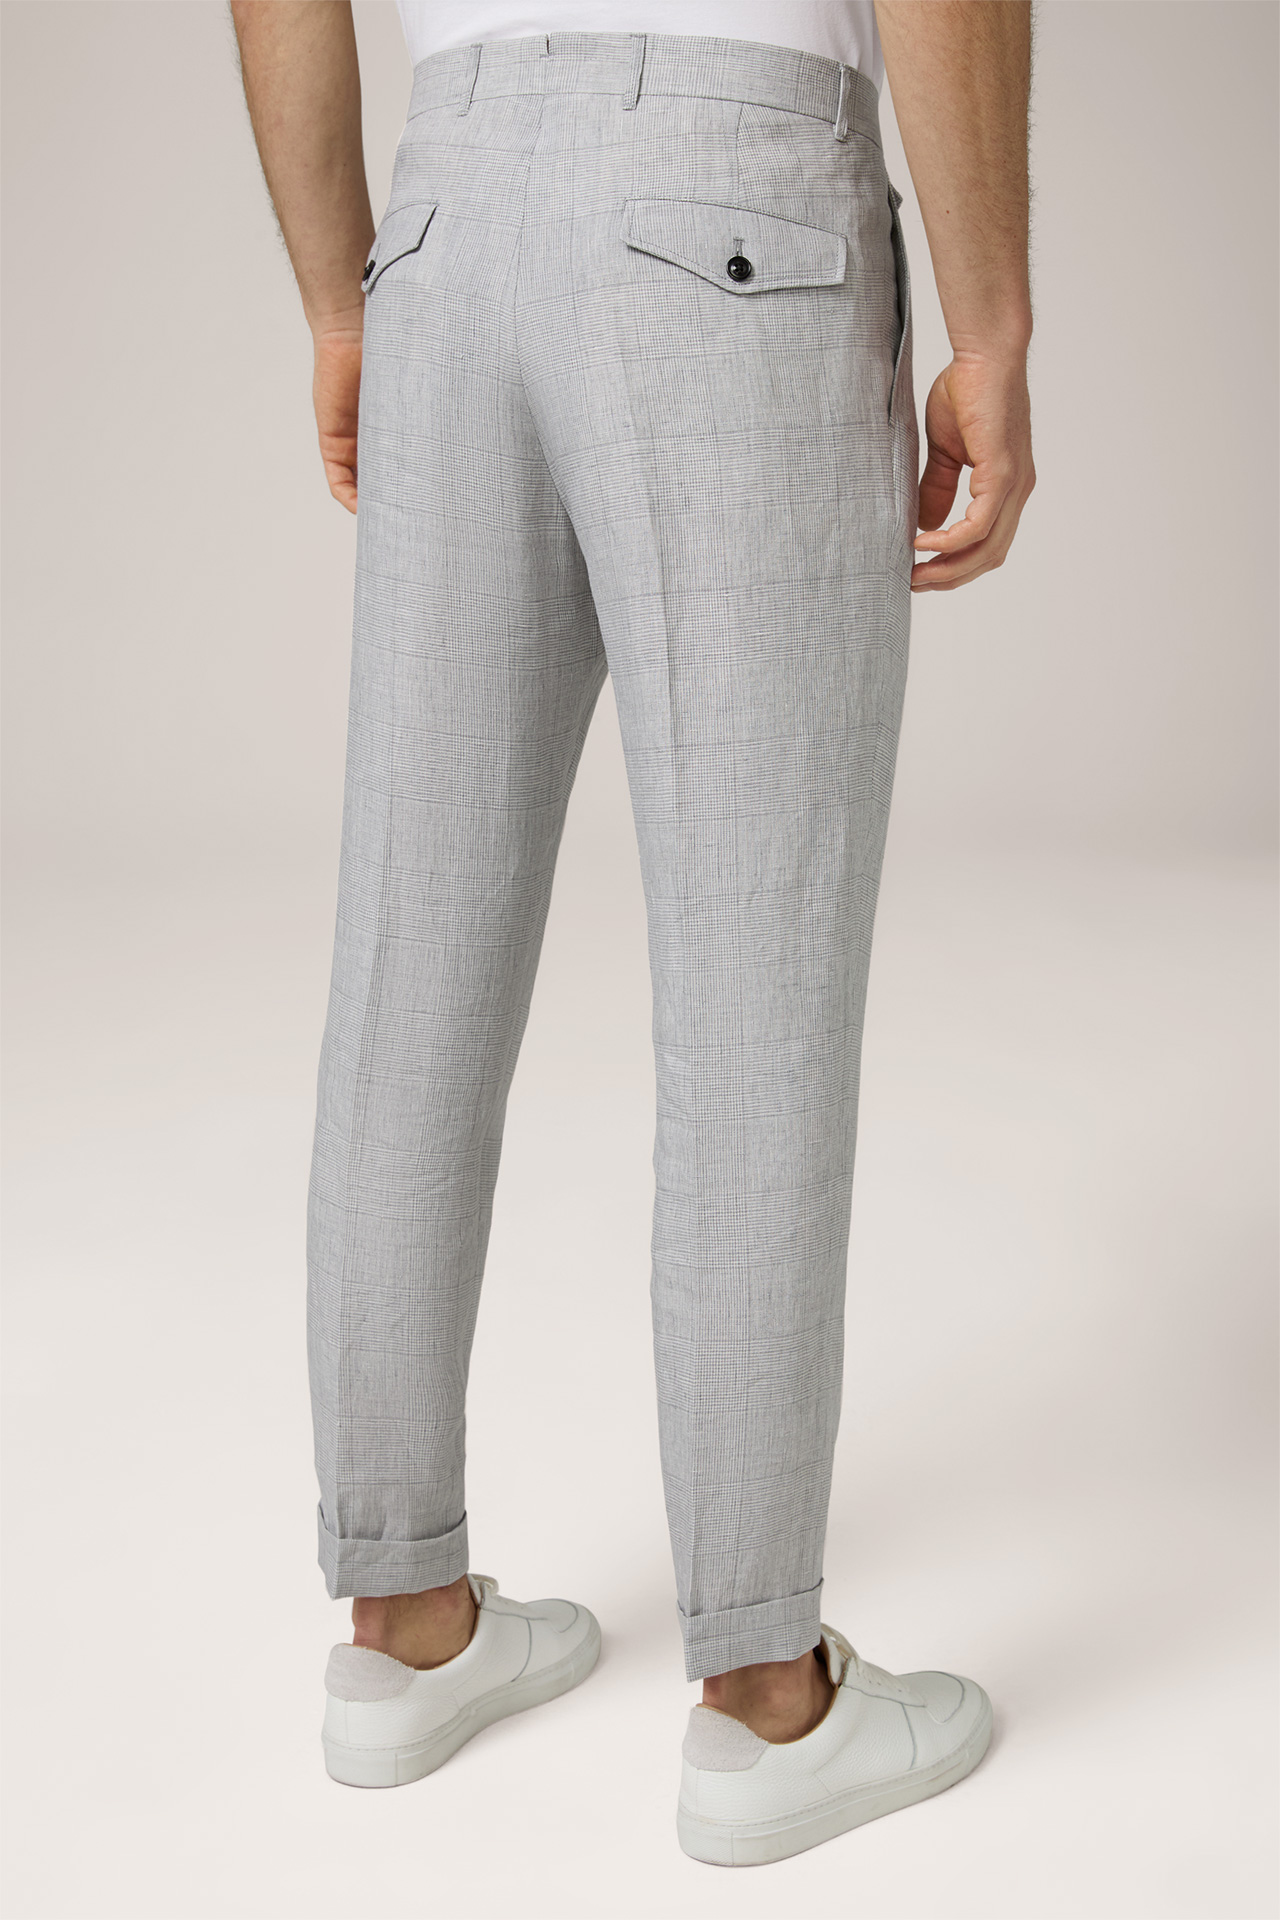 Pantalon à pinces modulable Sapo en lin, en gris à motif